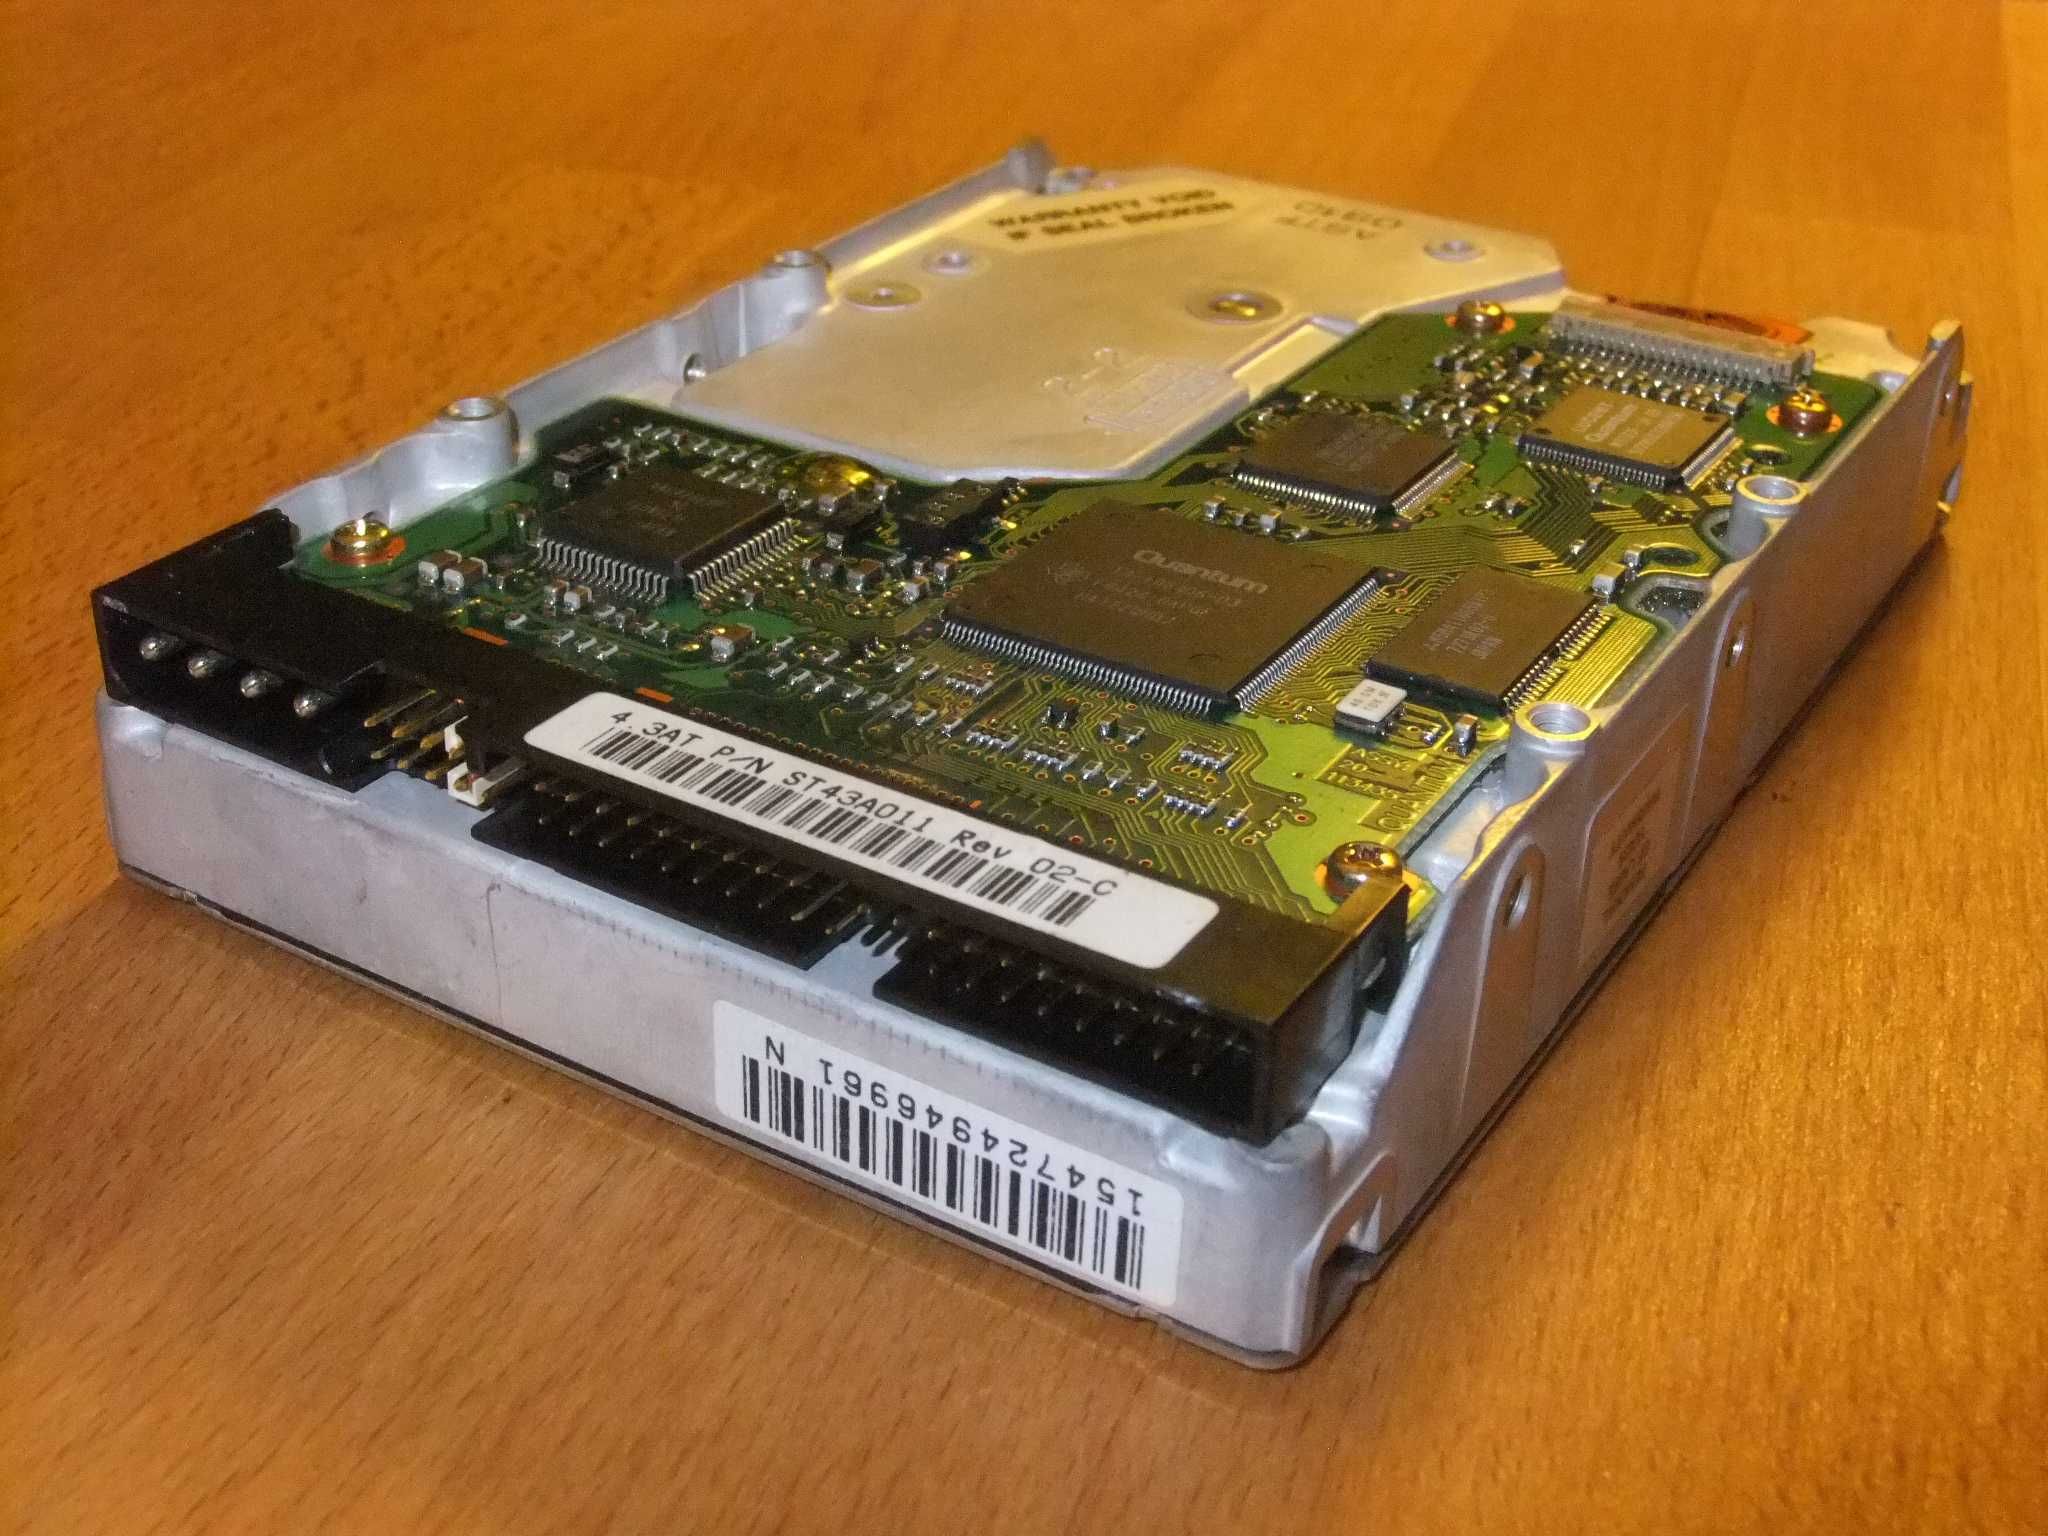 HDD 'Vintage' Quantum Fireball ST 4.3GB 3.5" IDE